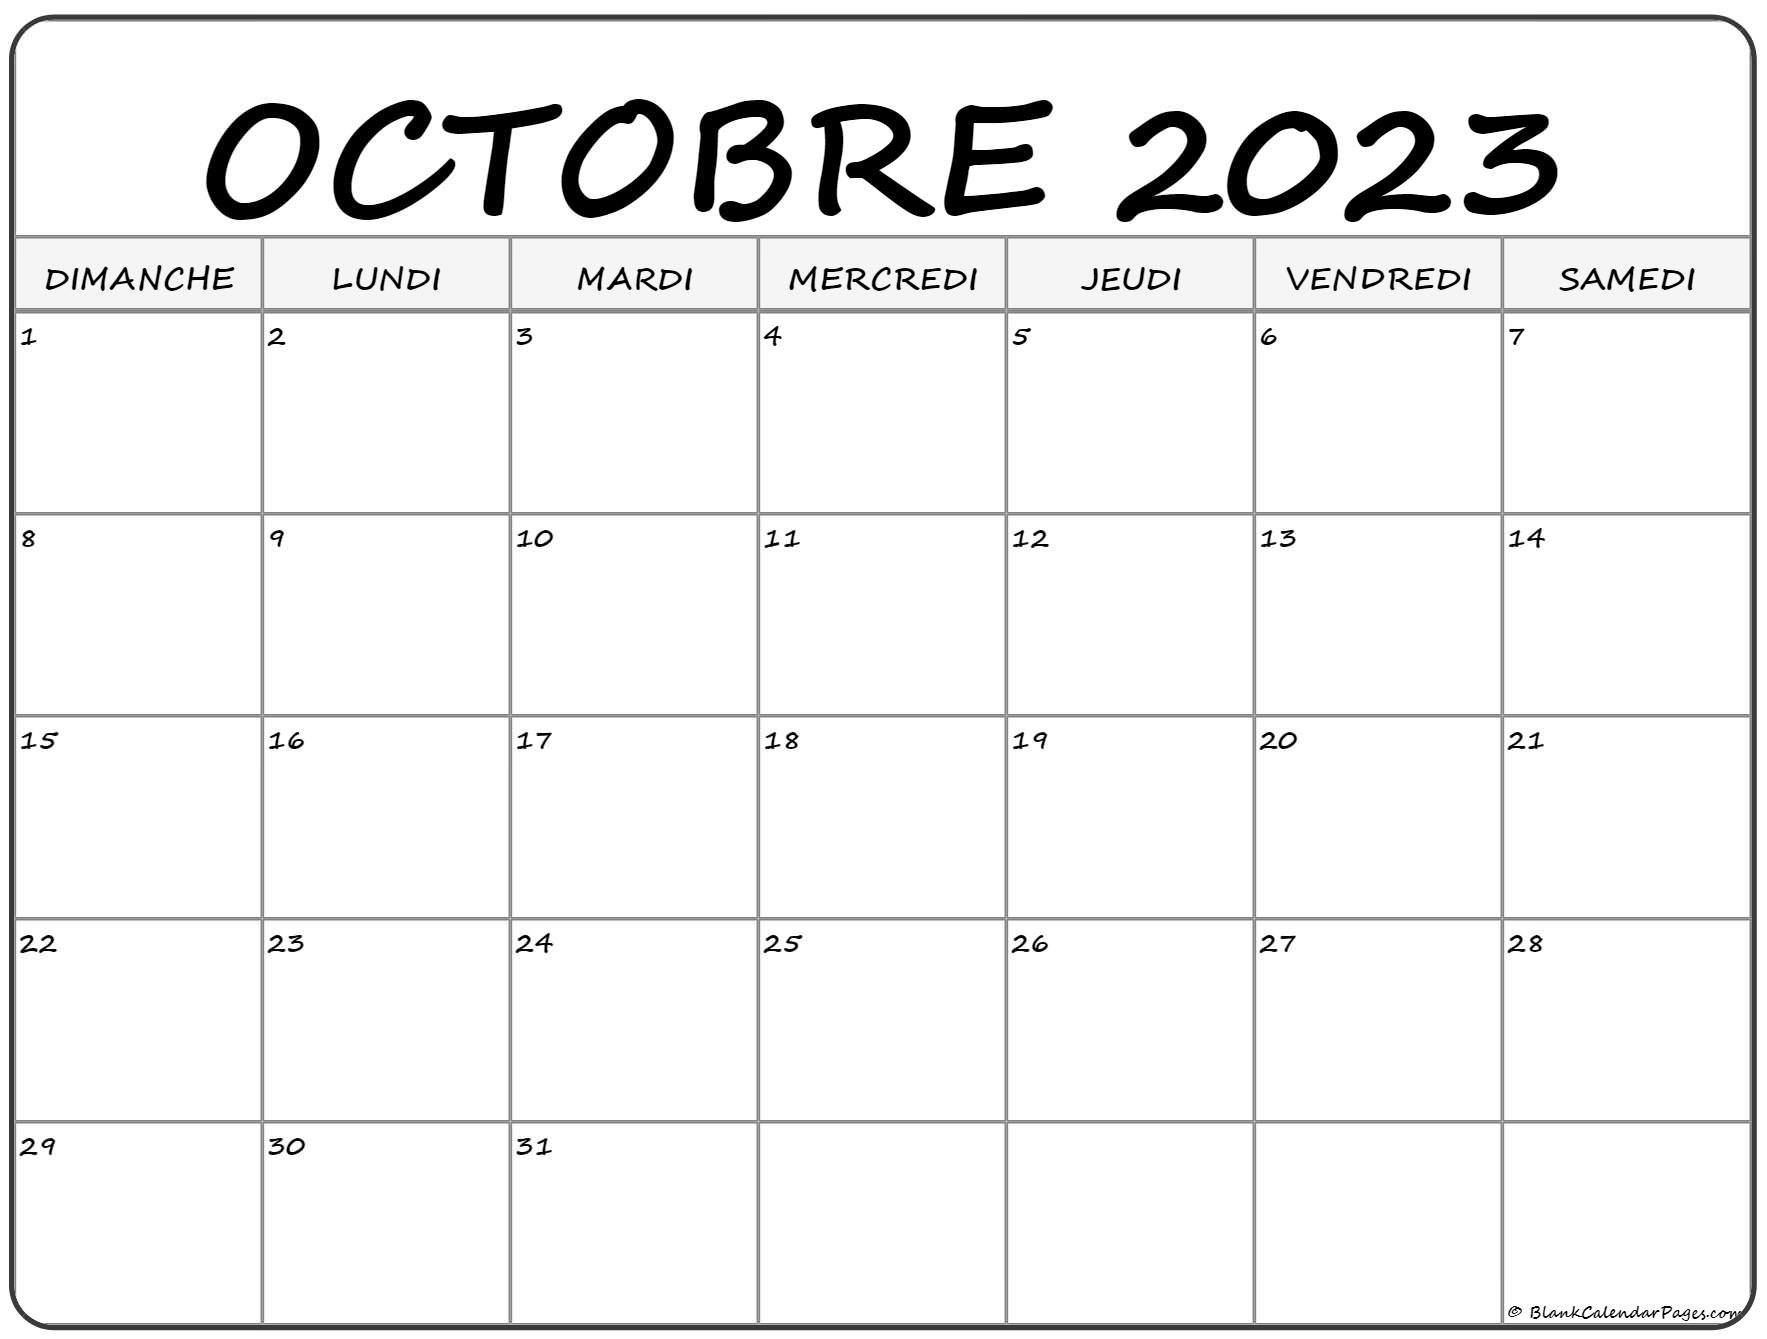 https://blankcalendarpages.com/printable_calendar/calendrier1/octobre-2023-calendrier-fr1.jpg